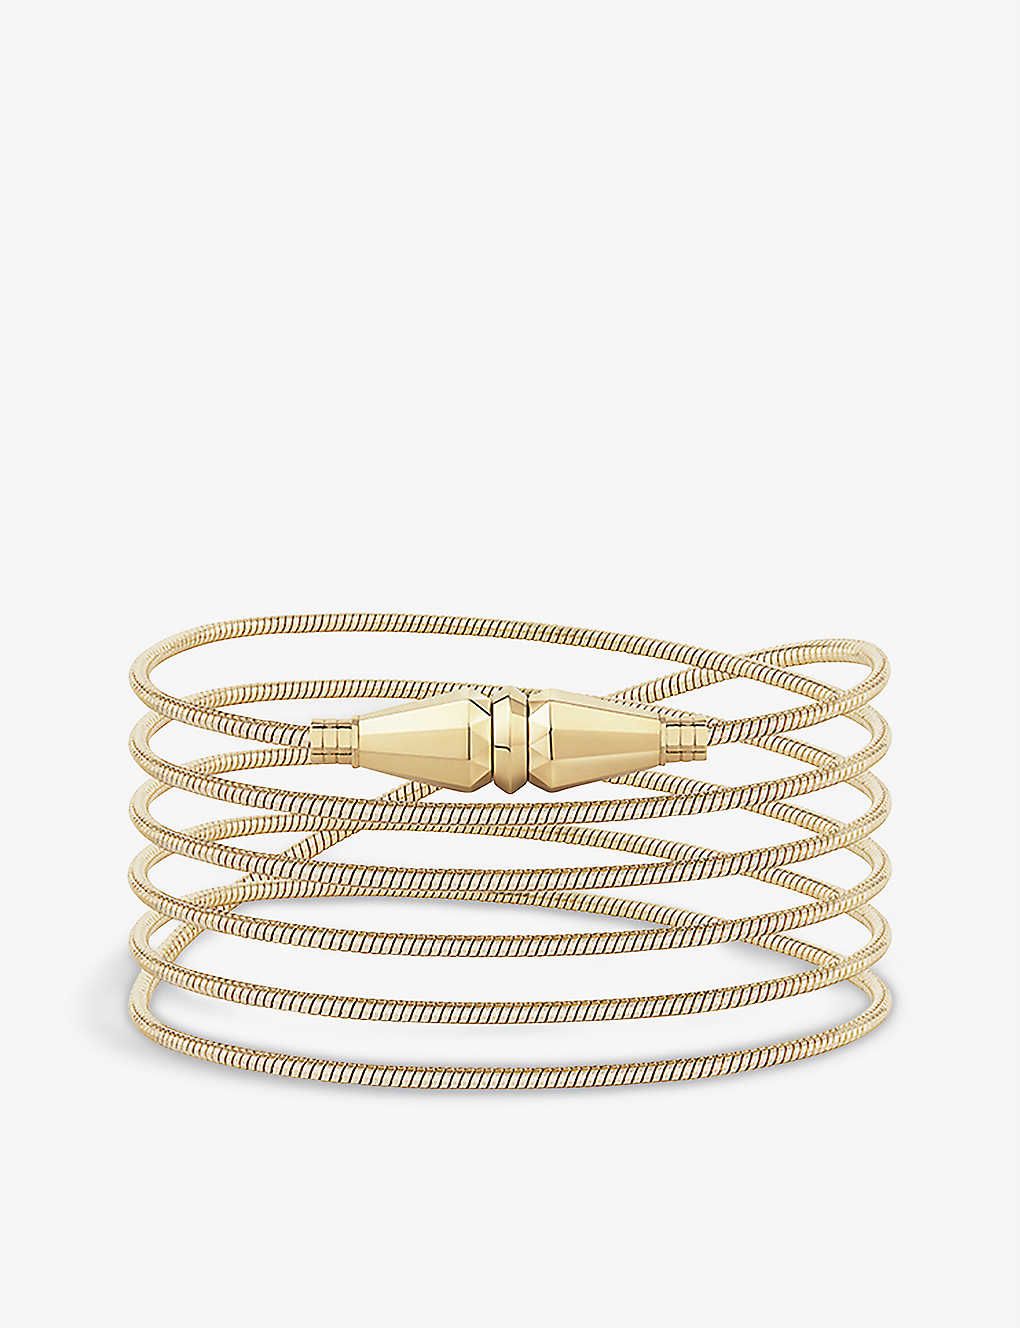 High End Brand Rose Gold Plated Brass CZ Stone Designer Bracelet Jewelry  Gift  eBay